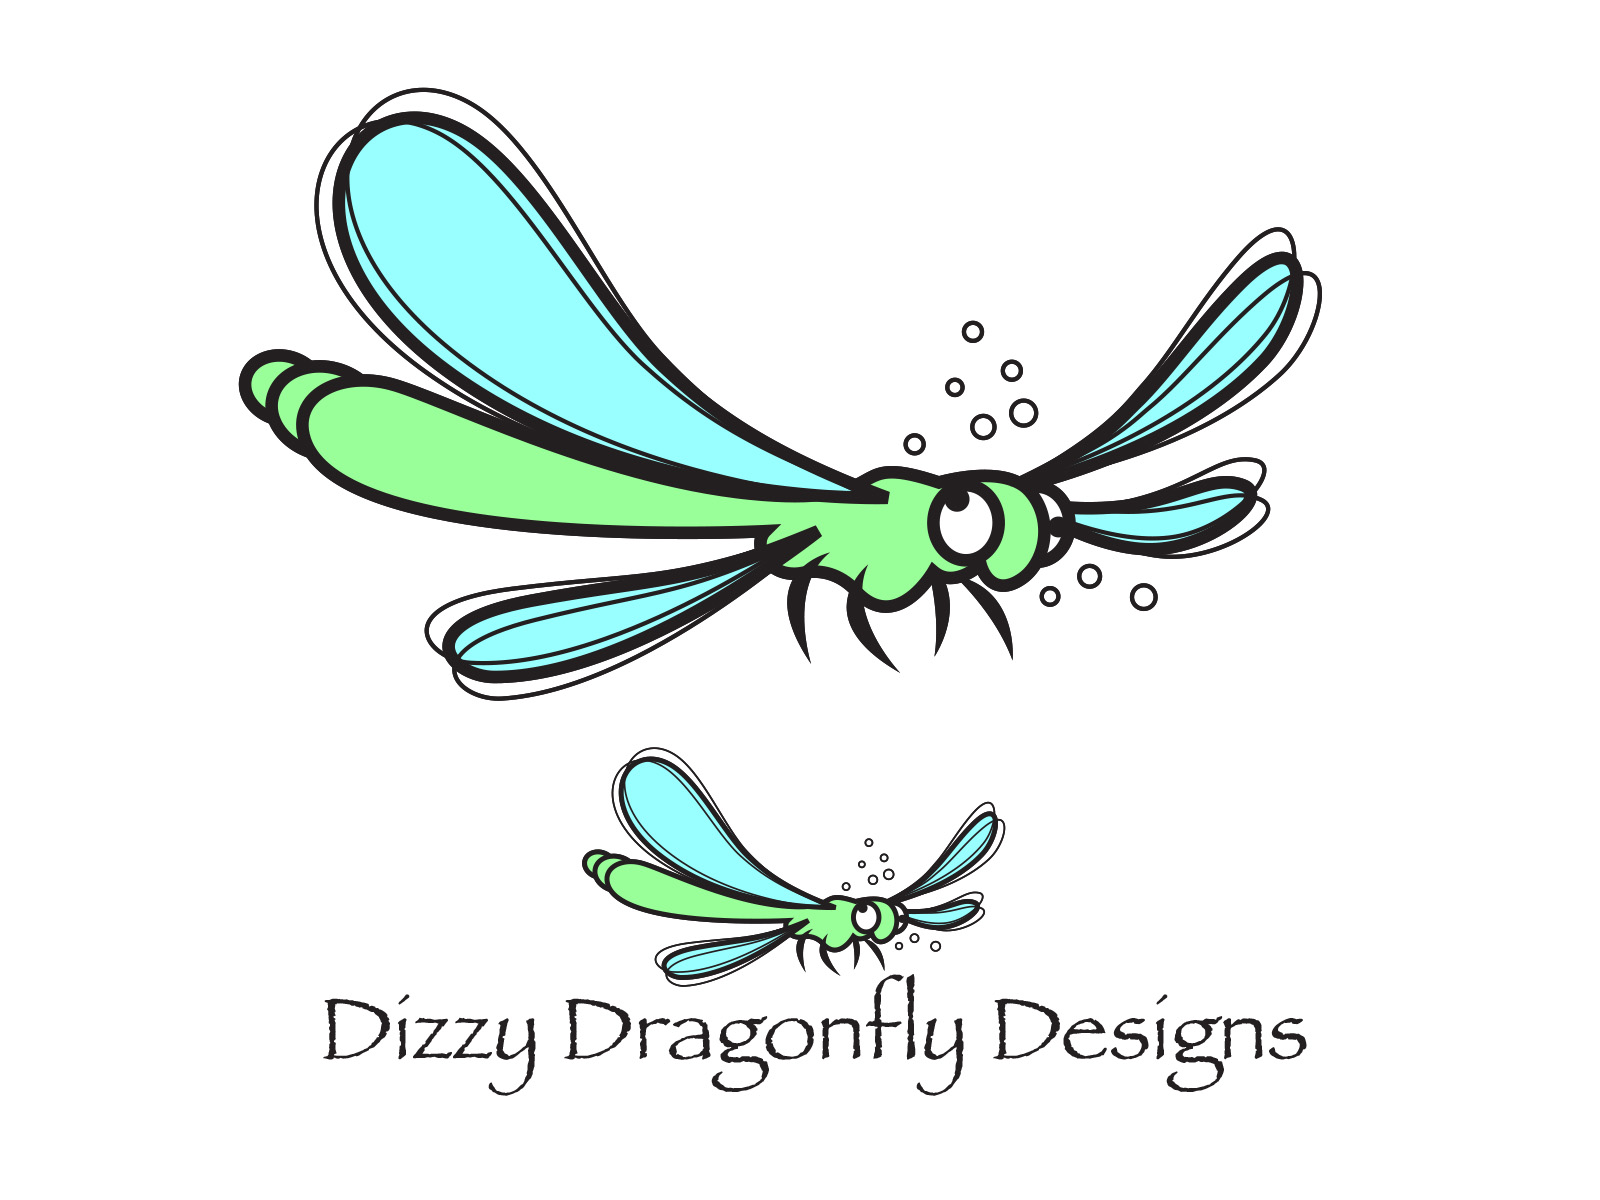 Dizzy Dragonfly Designs